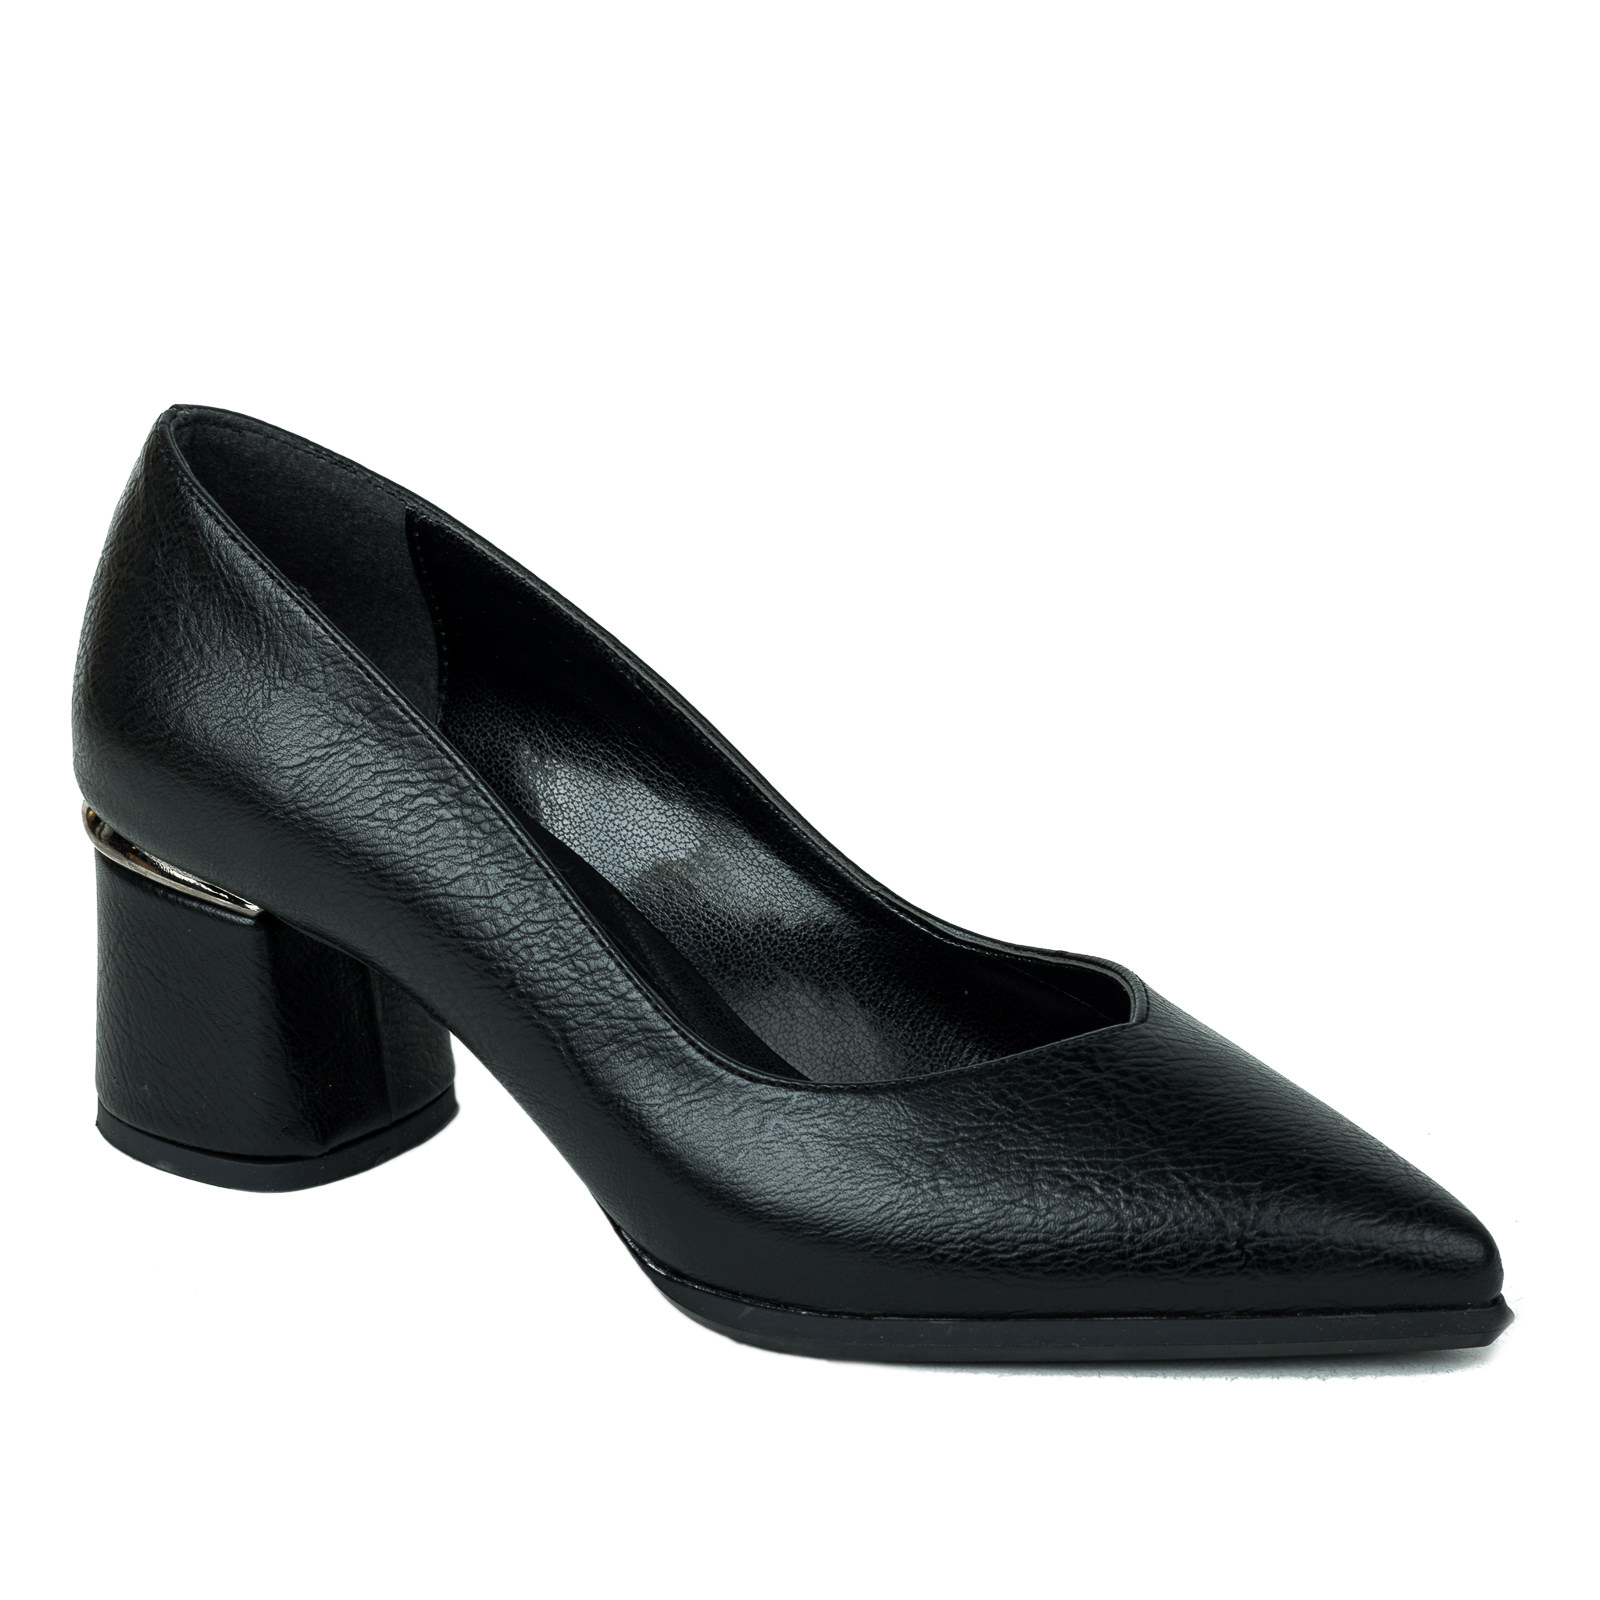 High-heels B257 - BLACK